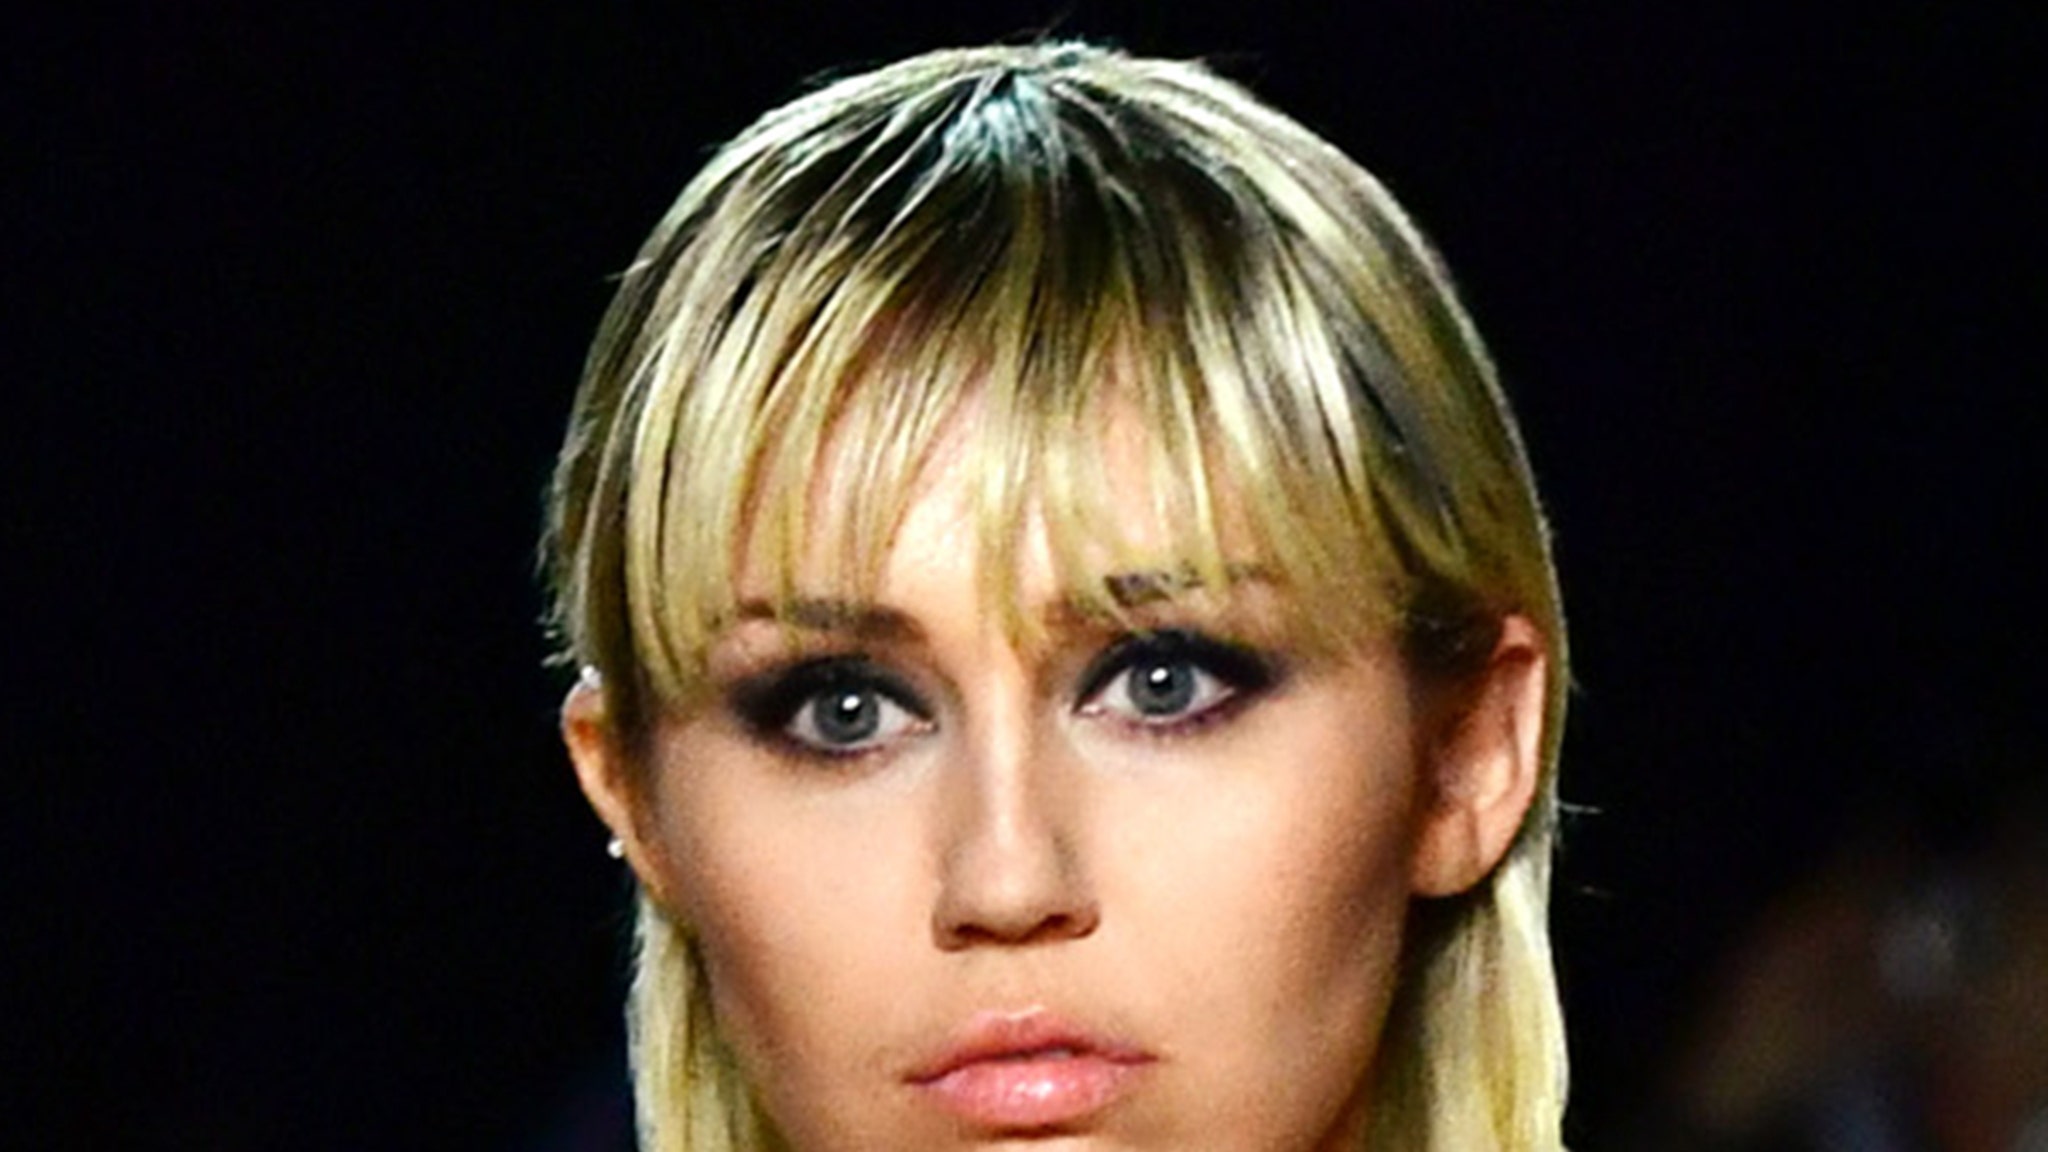 Miley Cyrus Says She Caught COVID On Tour ‘Definitely Worth It’ – TMZ